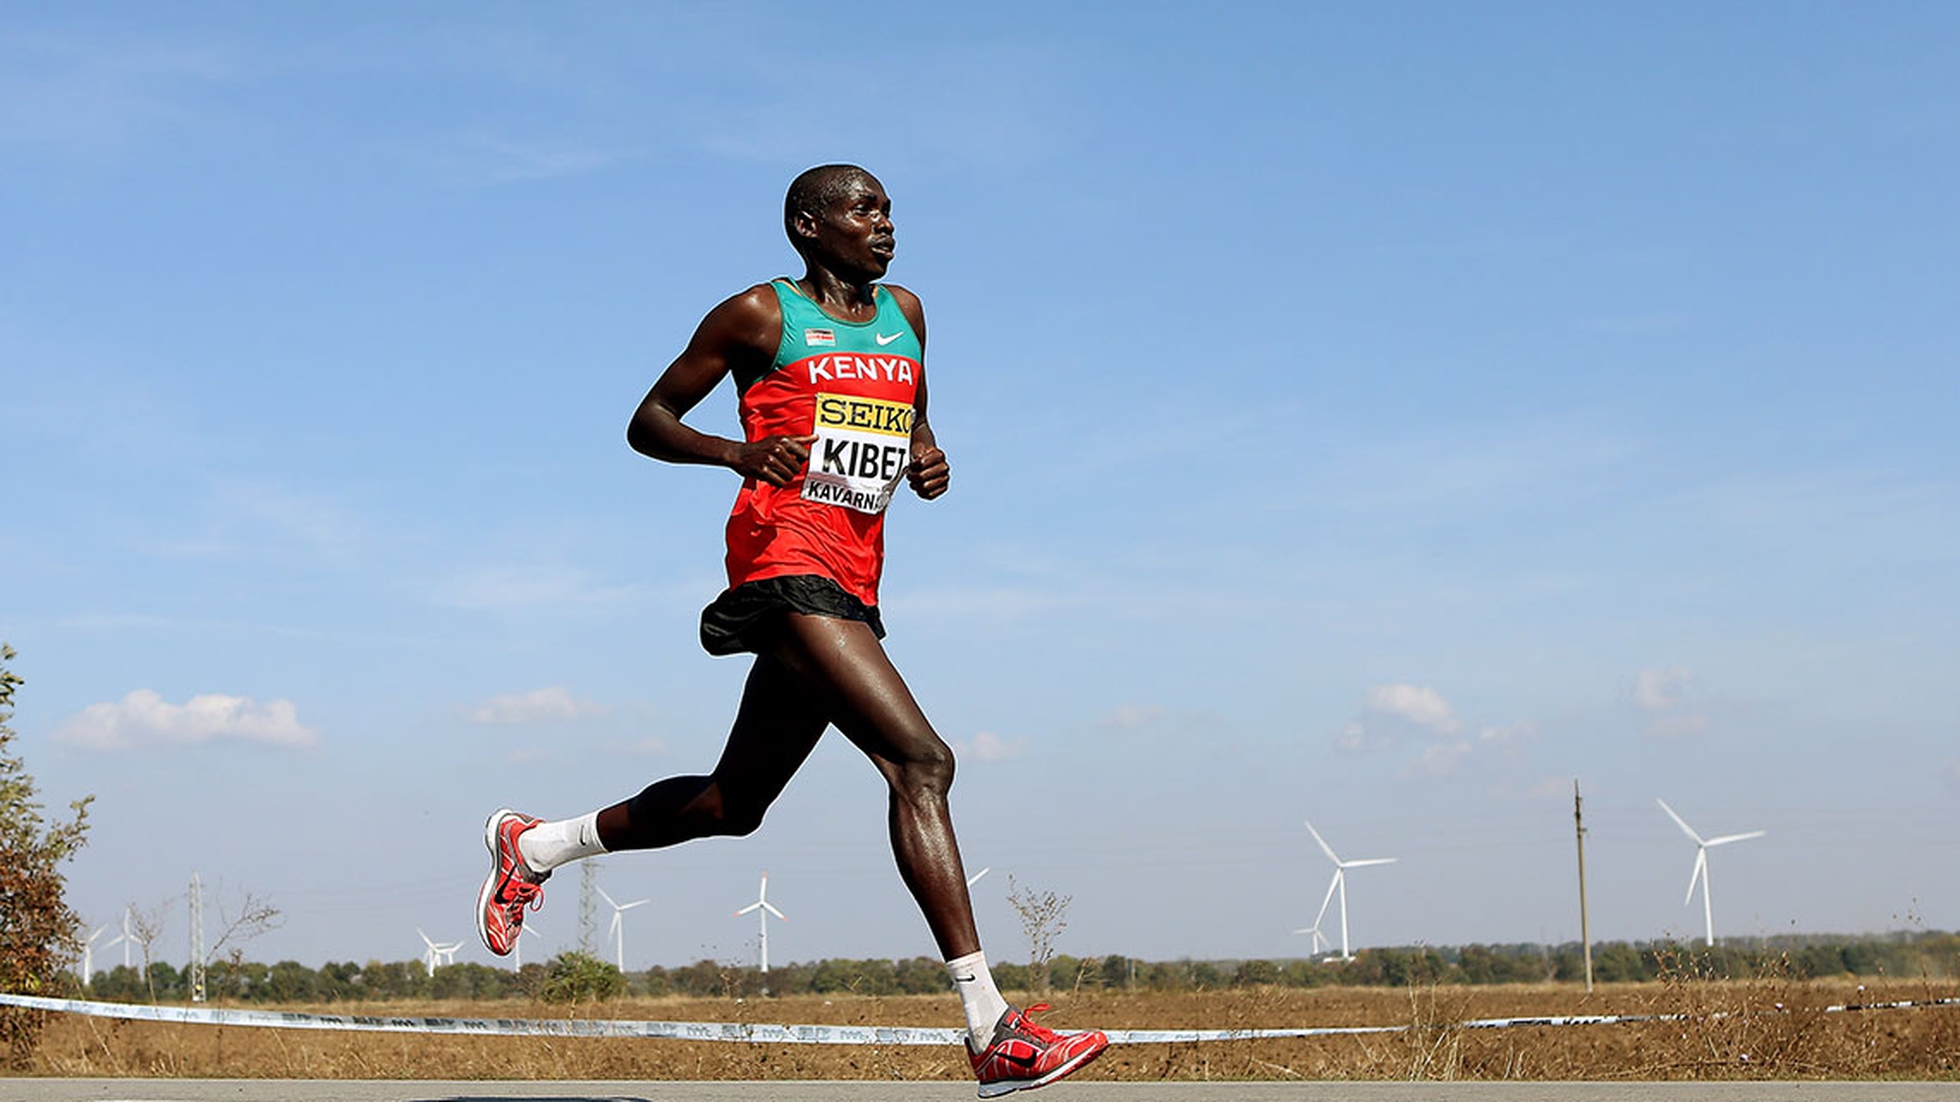 Спортсмен бегающий на длинные. Кипчоге бегун кенийский. Календжин племя. Кепчуга бегун. Хенри роно кенийский бегун.